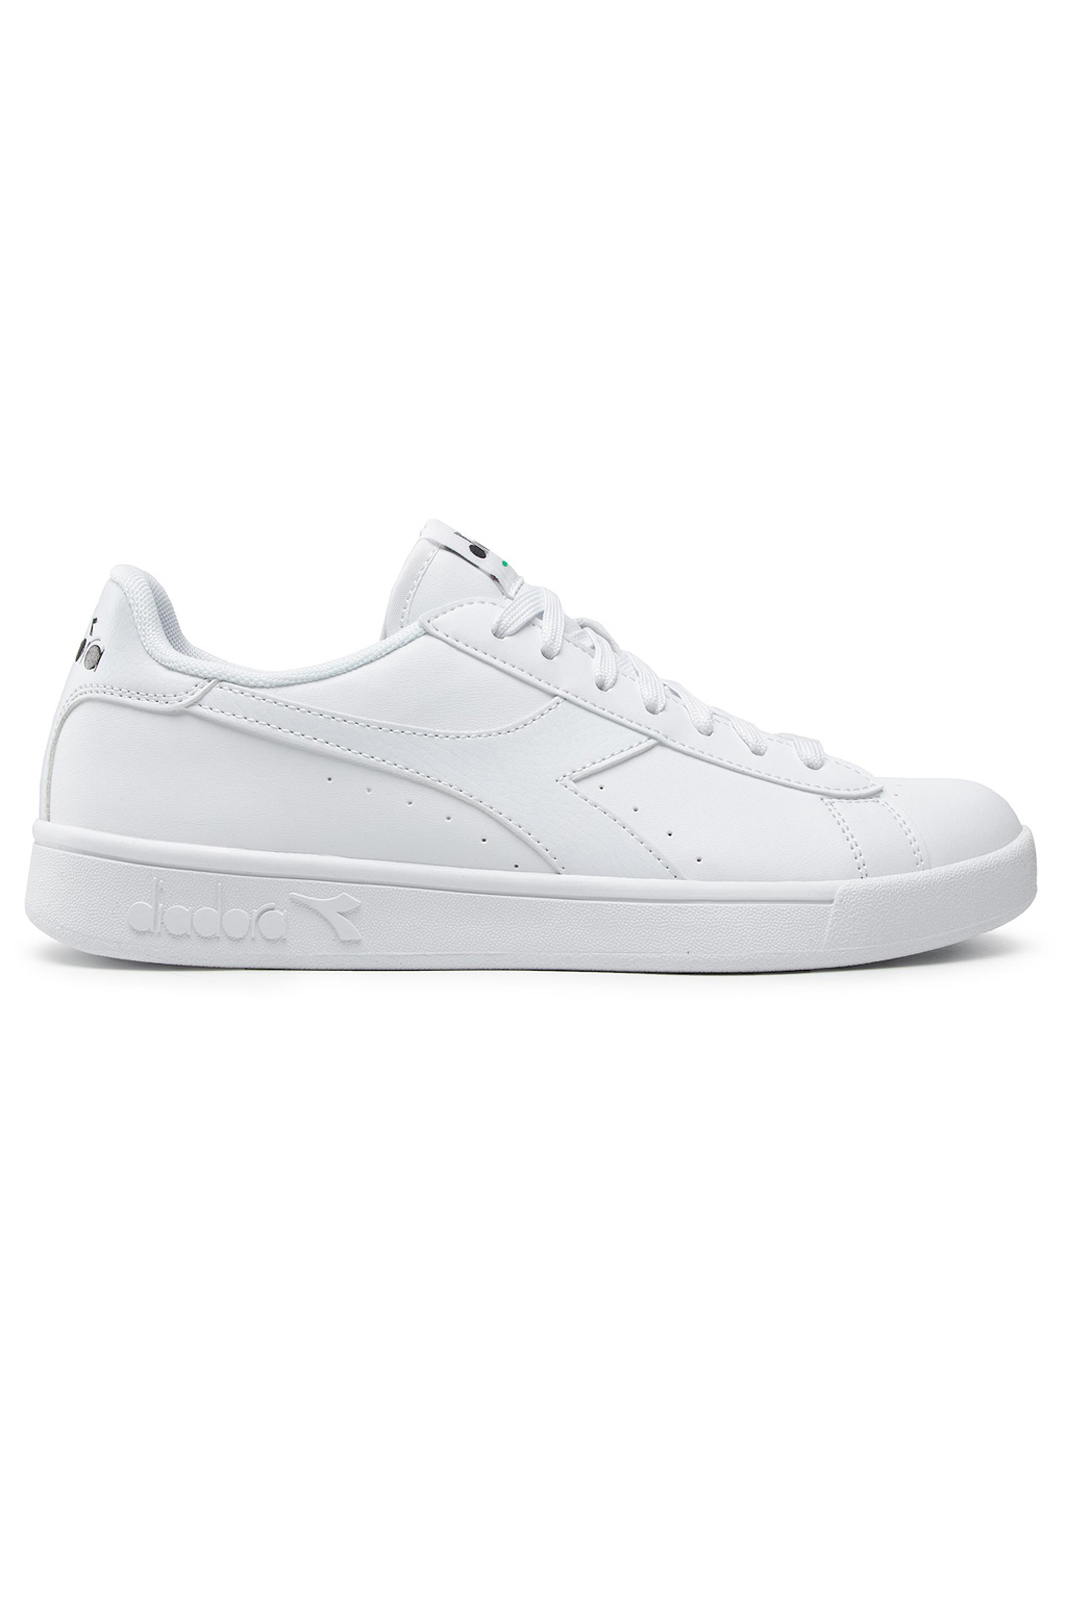 Diadora - TORNEO - WHITE/WHITE/BLACK Ανδρικά > Παπούτσια > Sneaker > Παπούτσι Low Cut